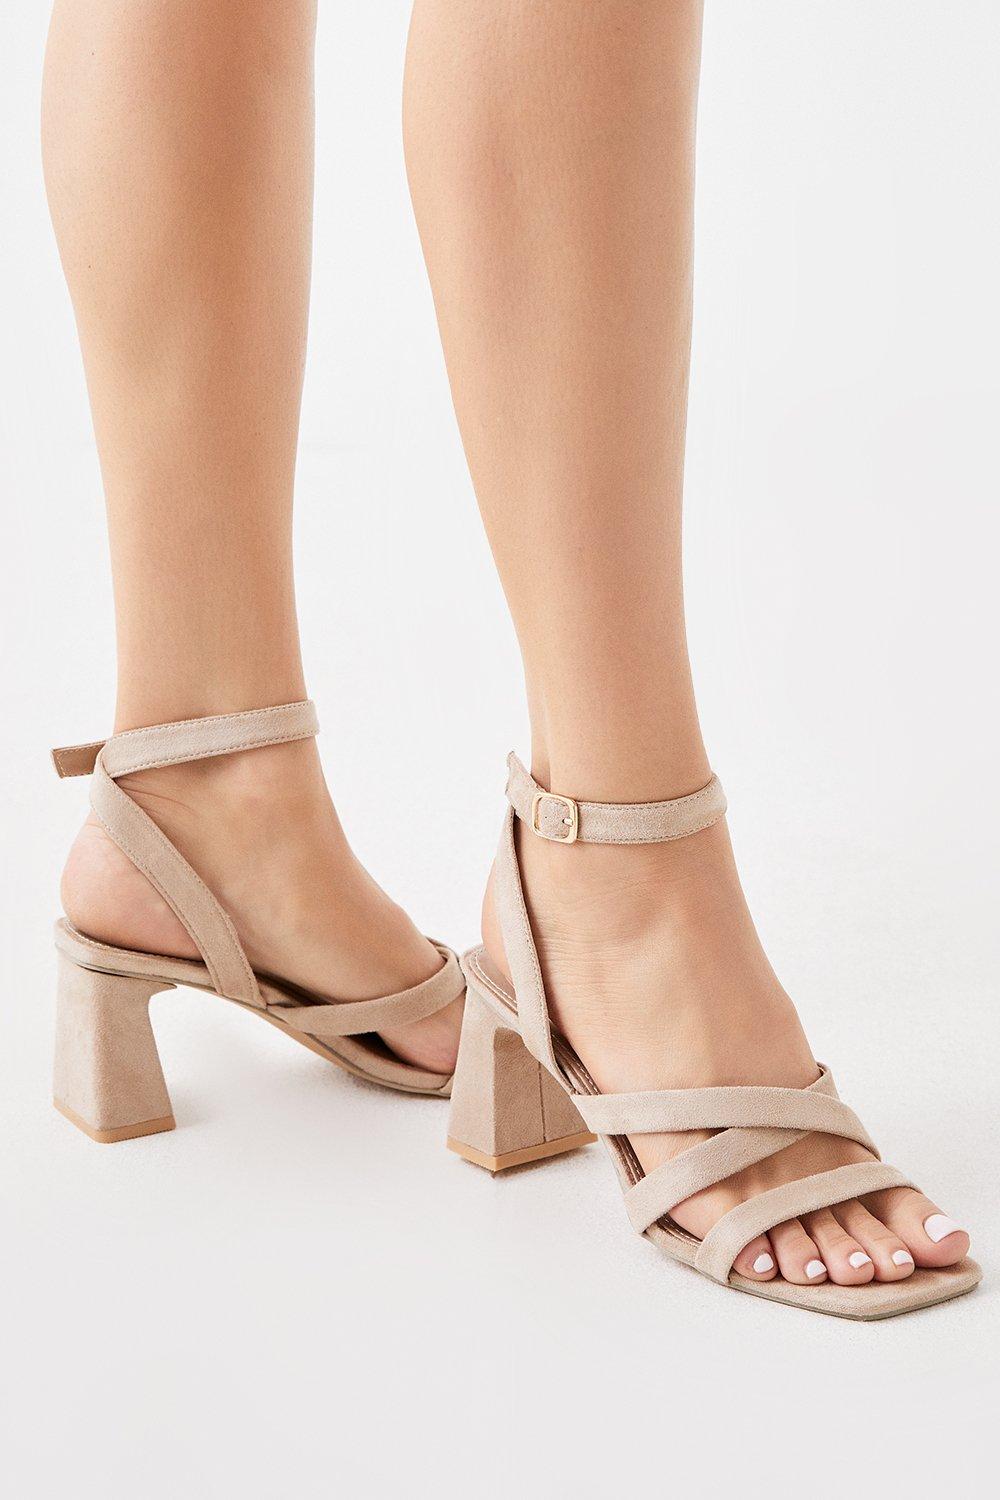 Women’s Bethany Strappy Heeled Sandals - blush - 5